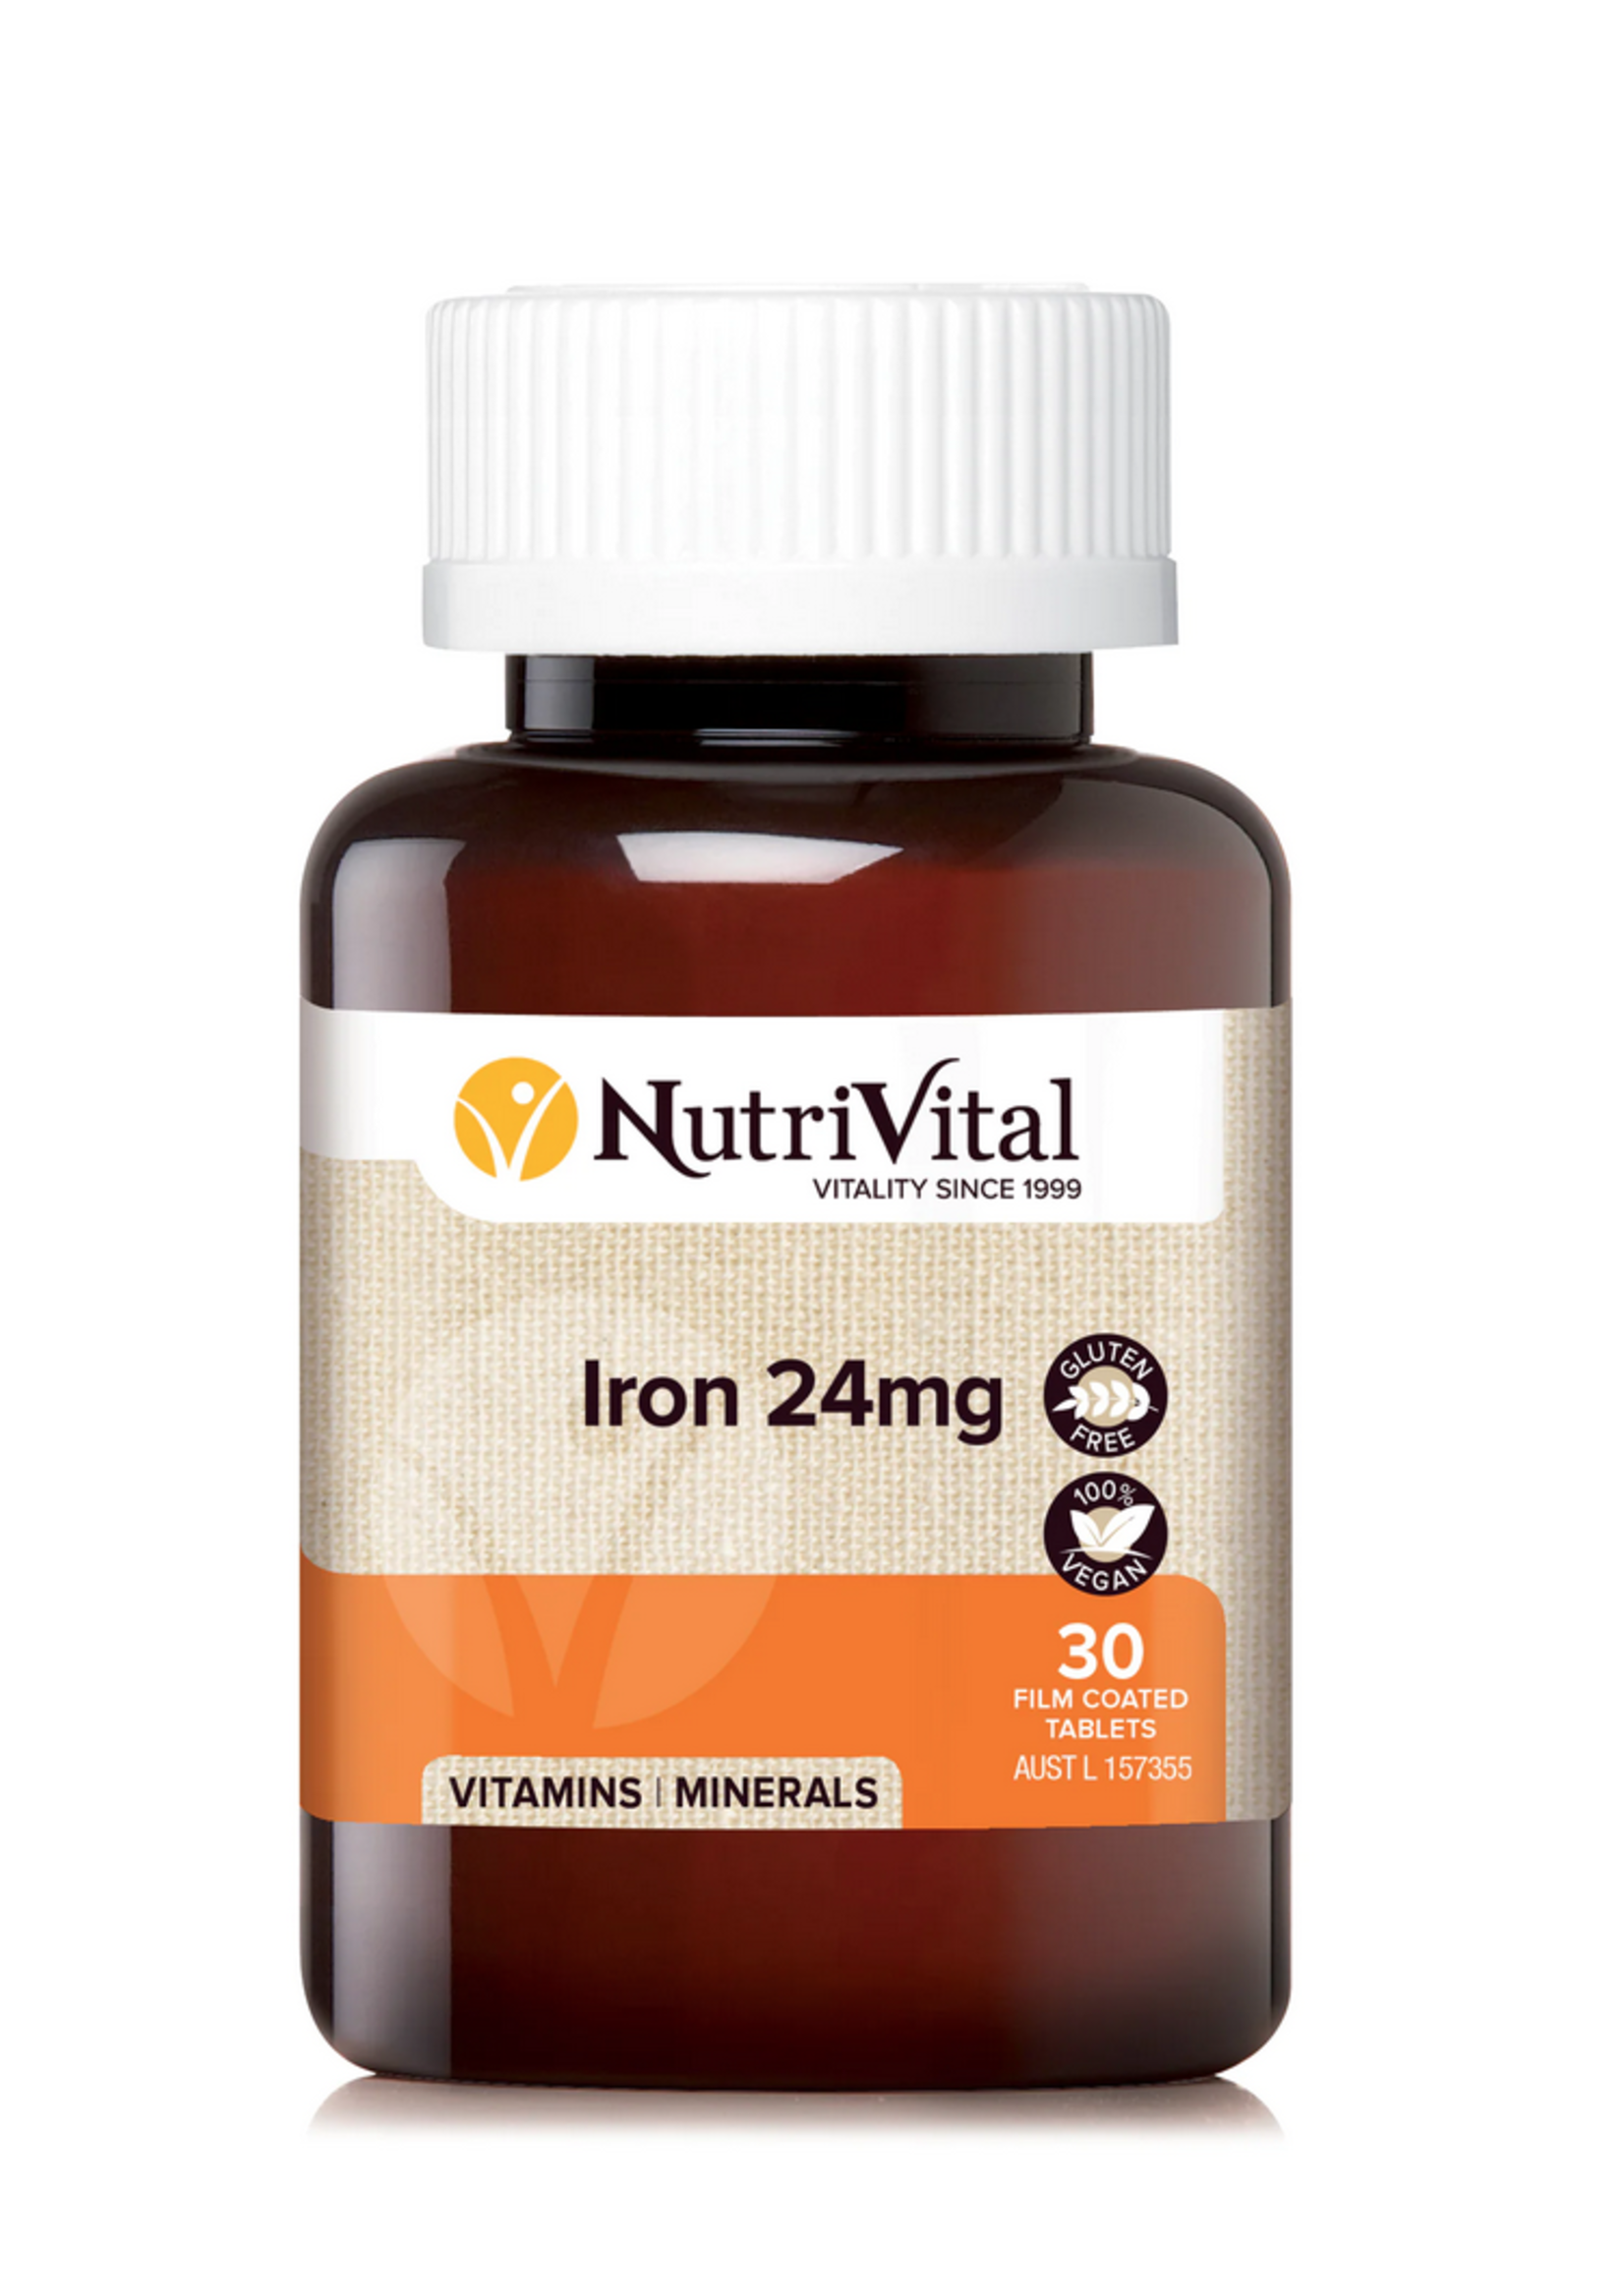 Nutrivital NutriVital Iron 24mg 30T